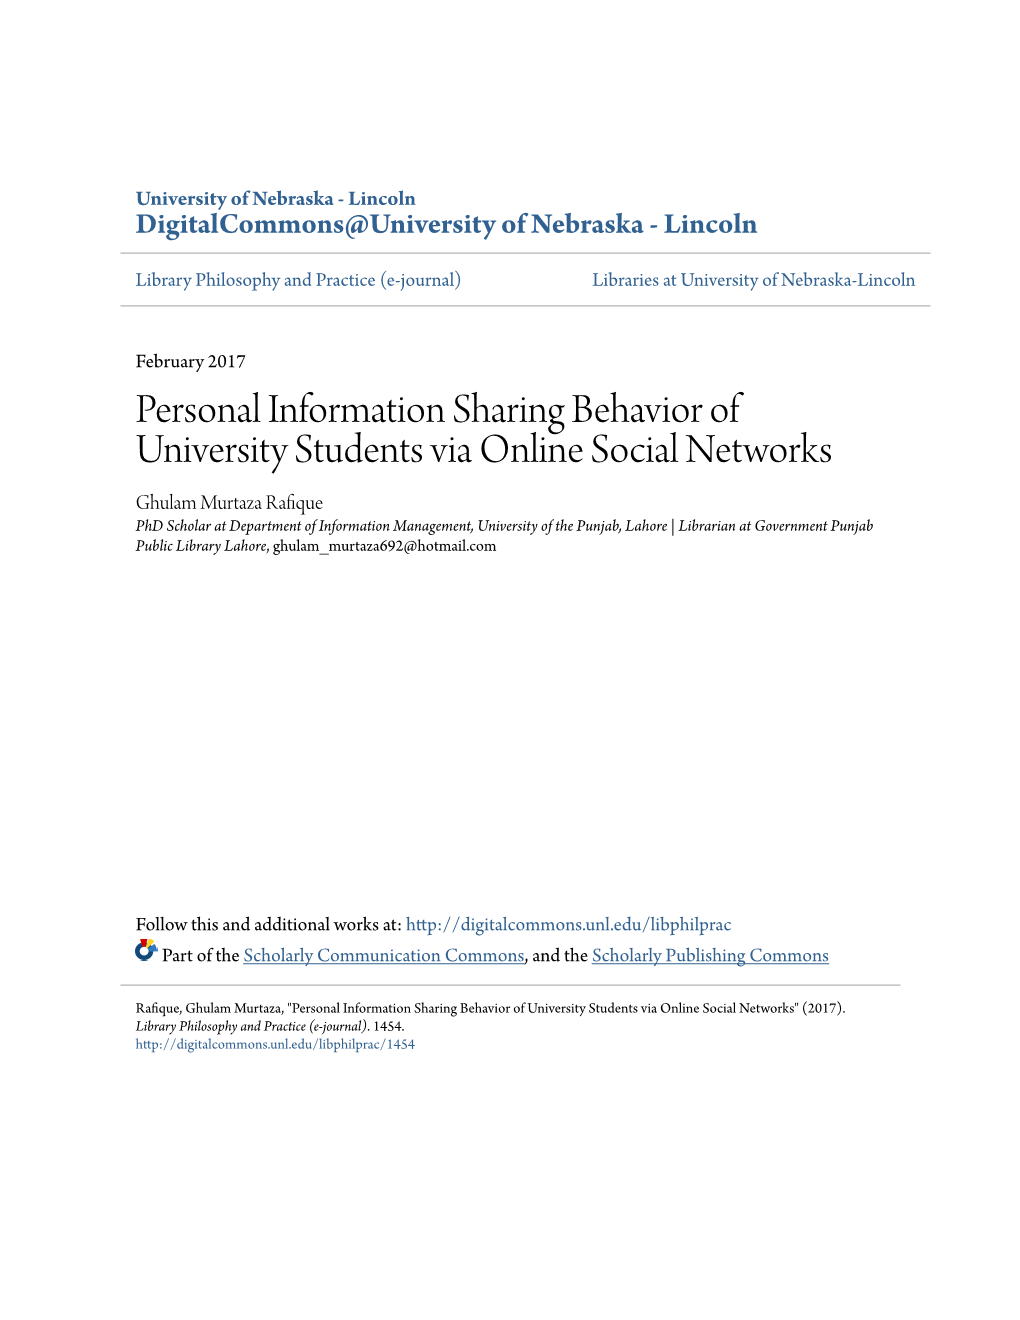 Personal Information Sharing Behavior of University Students Via